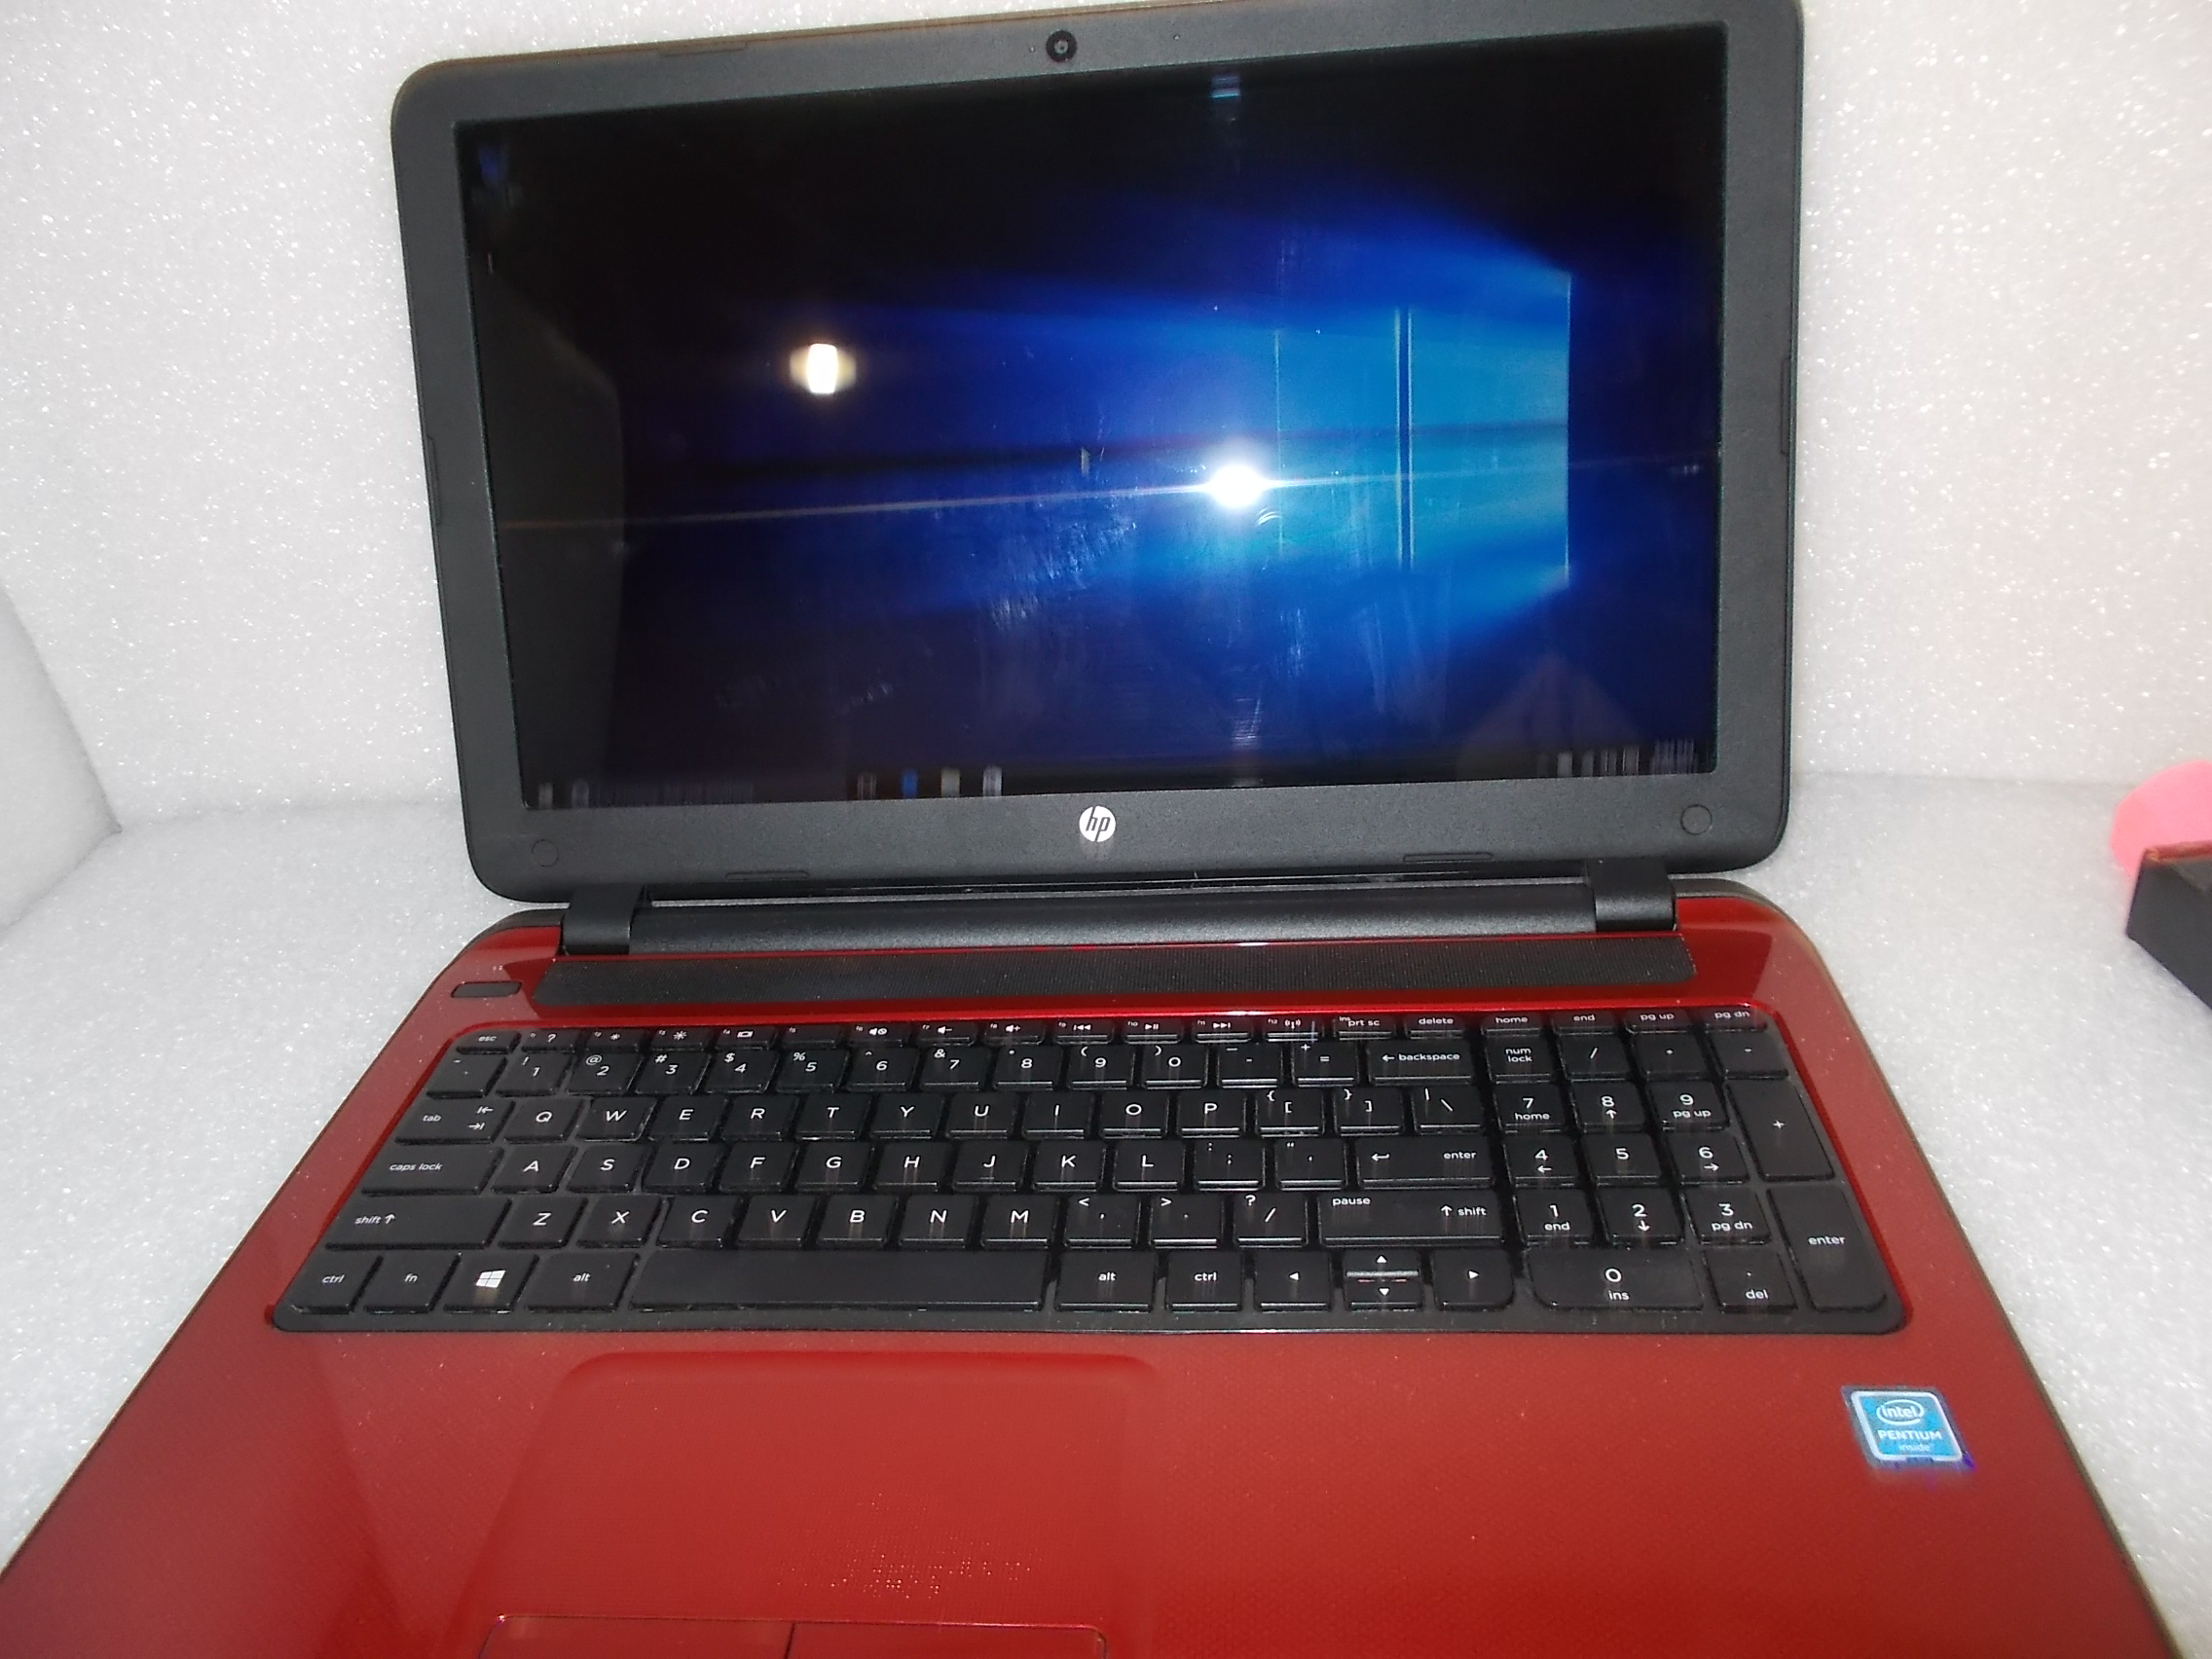 Brand New Lenovo 15.6″ ThinkPad / Laptop Backpack Bag 57Y4307